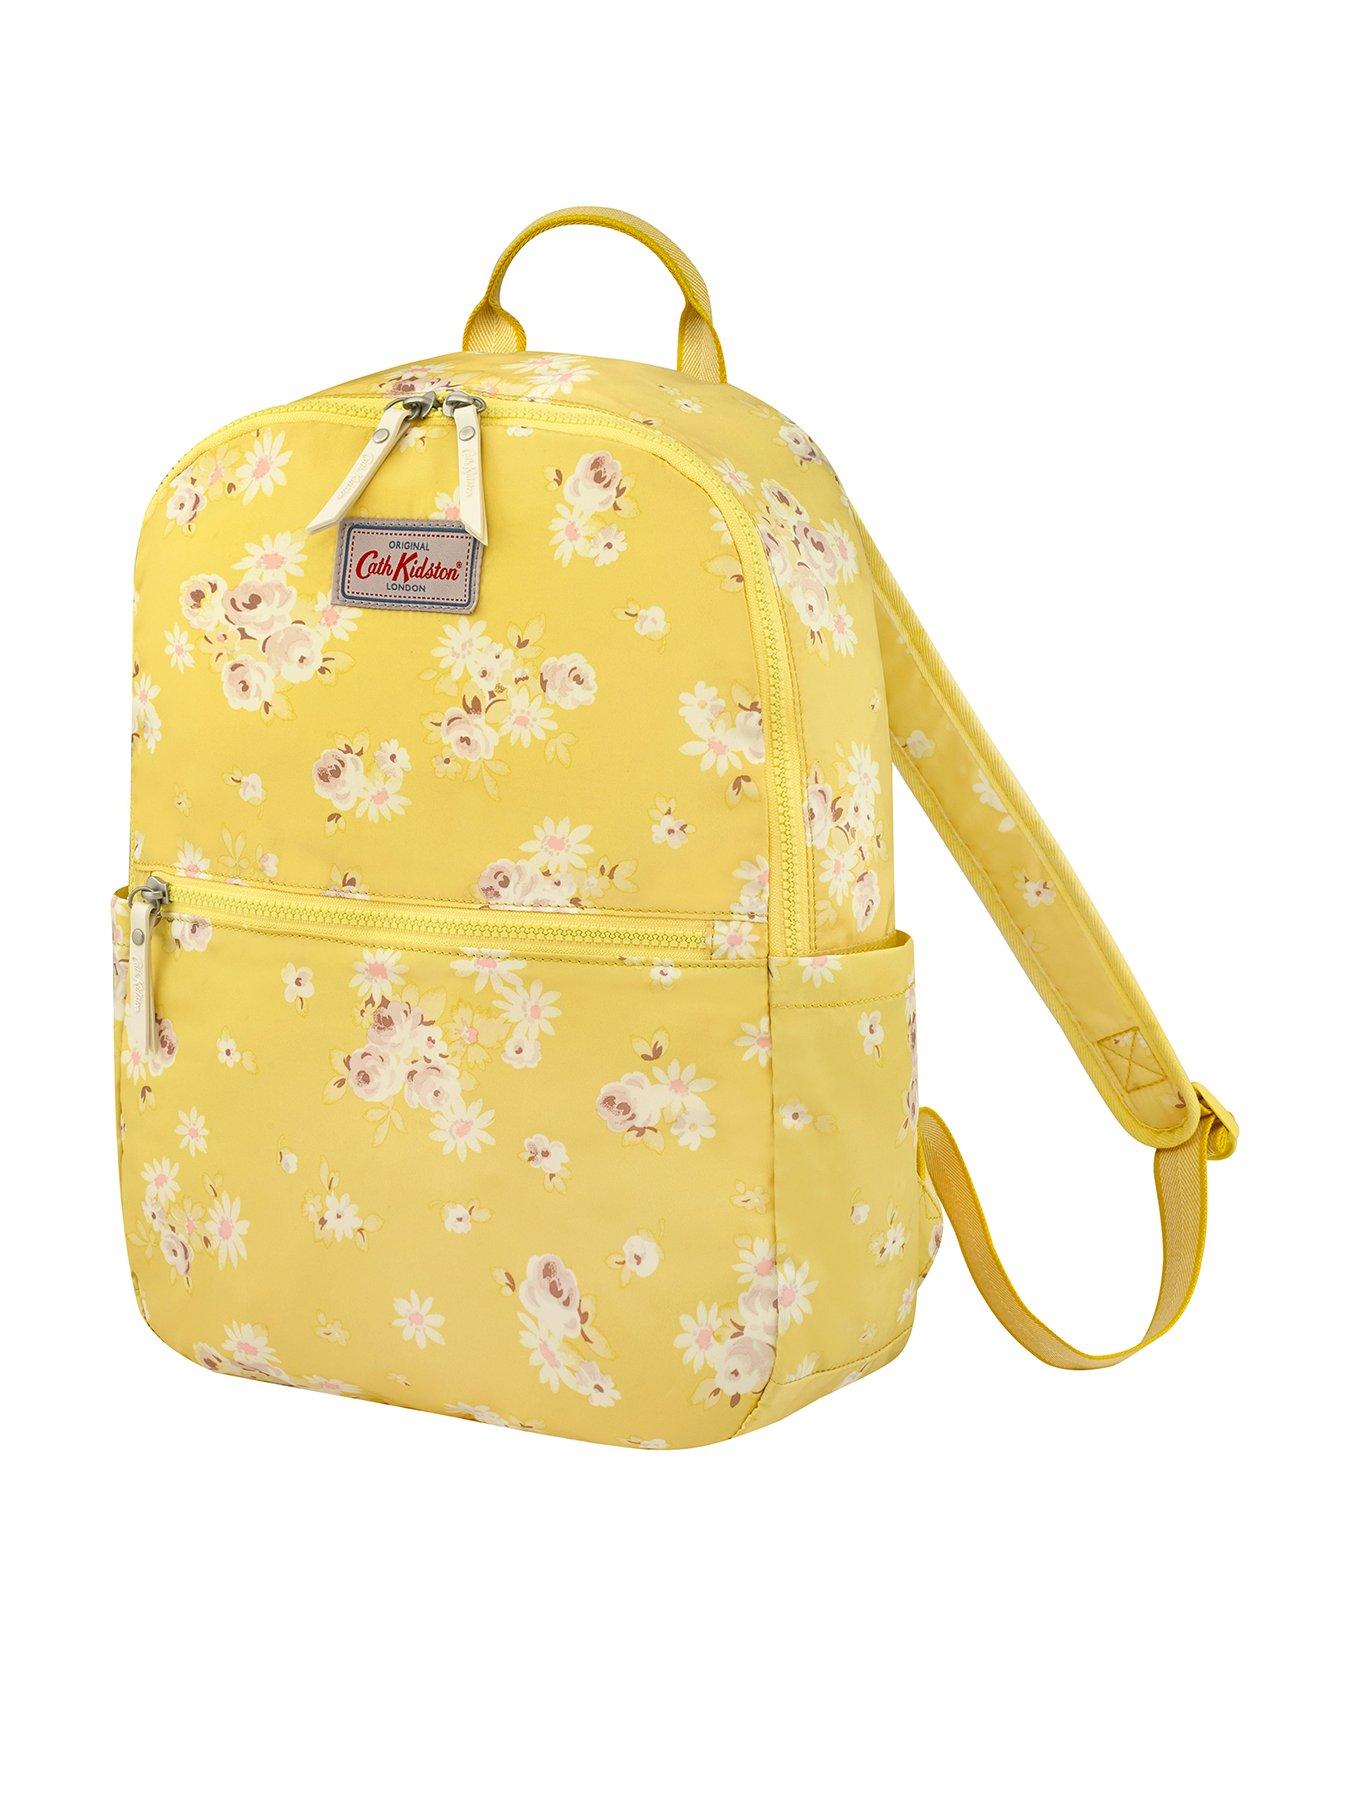 Cath Kidston Daisy Rose Foldaway Backpack - Yellow | www.semadata.org